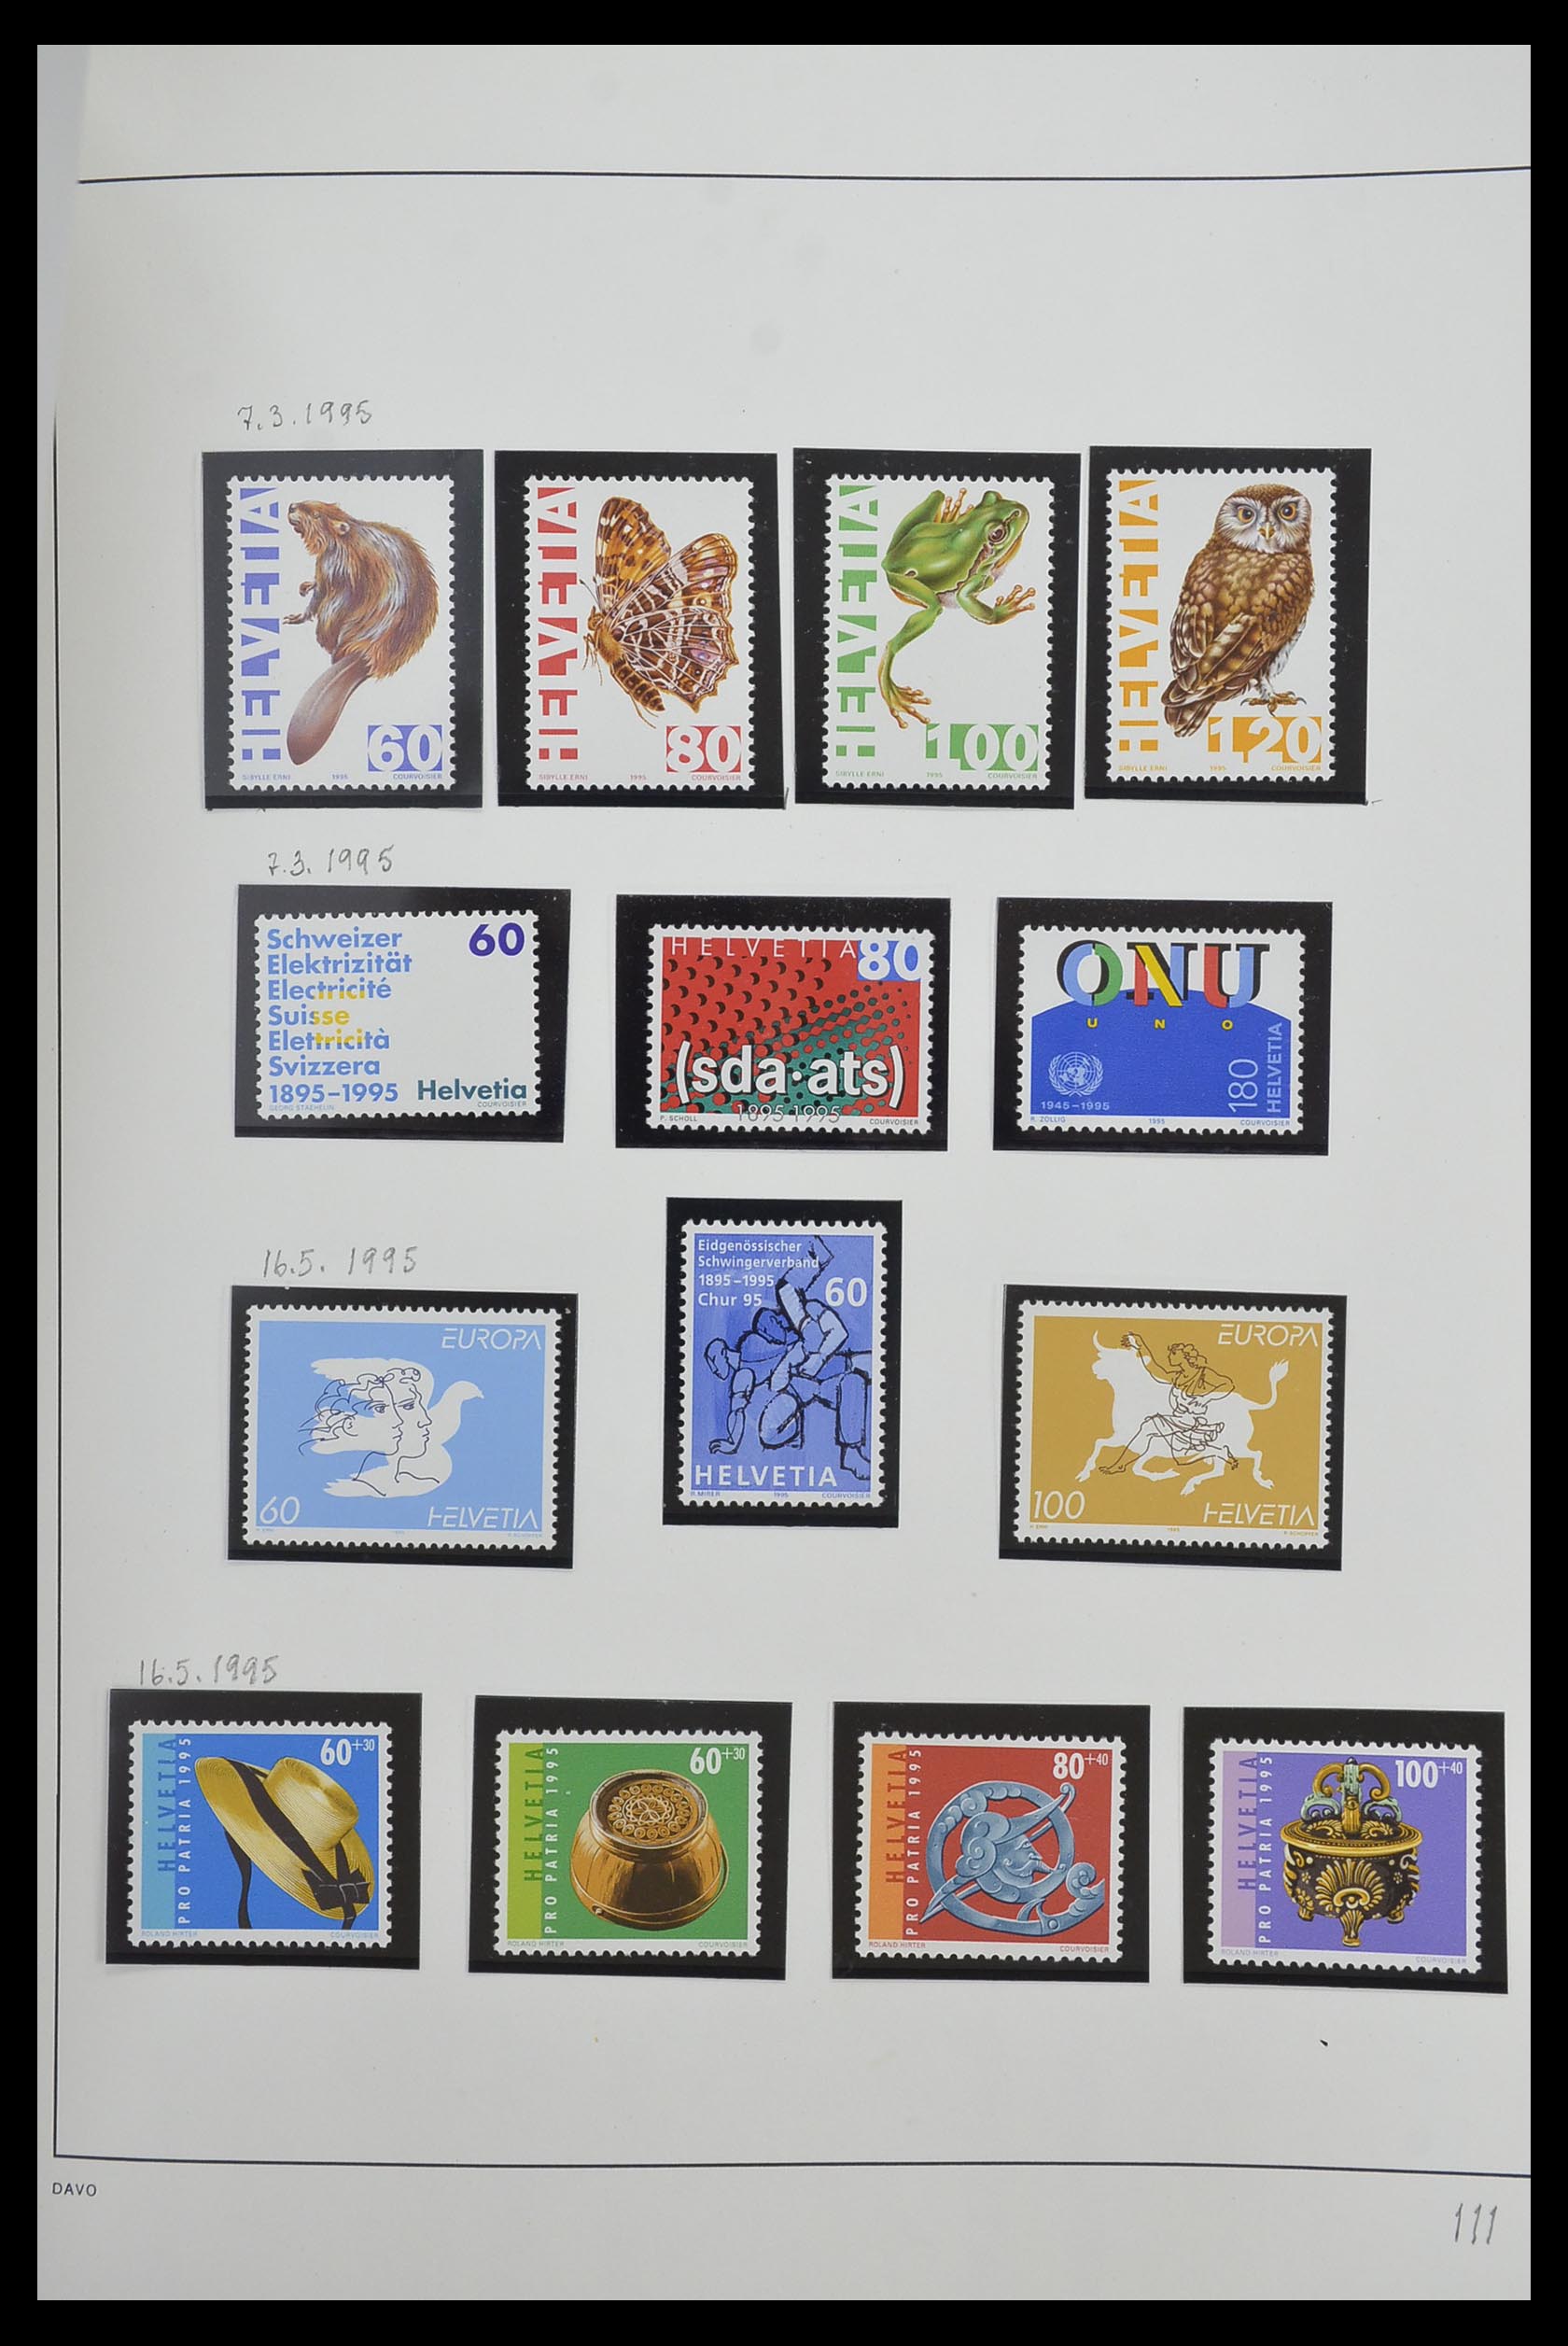 33556 113 - Stamp collection 33556 Switzerland 1862-2000.